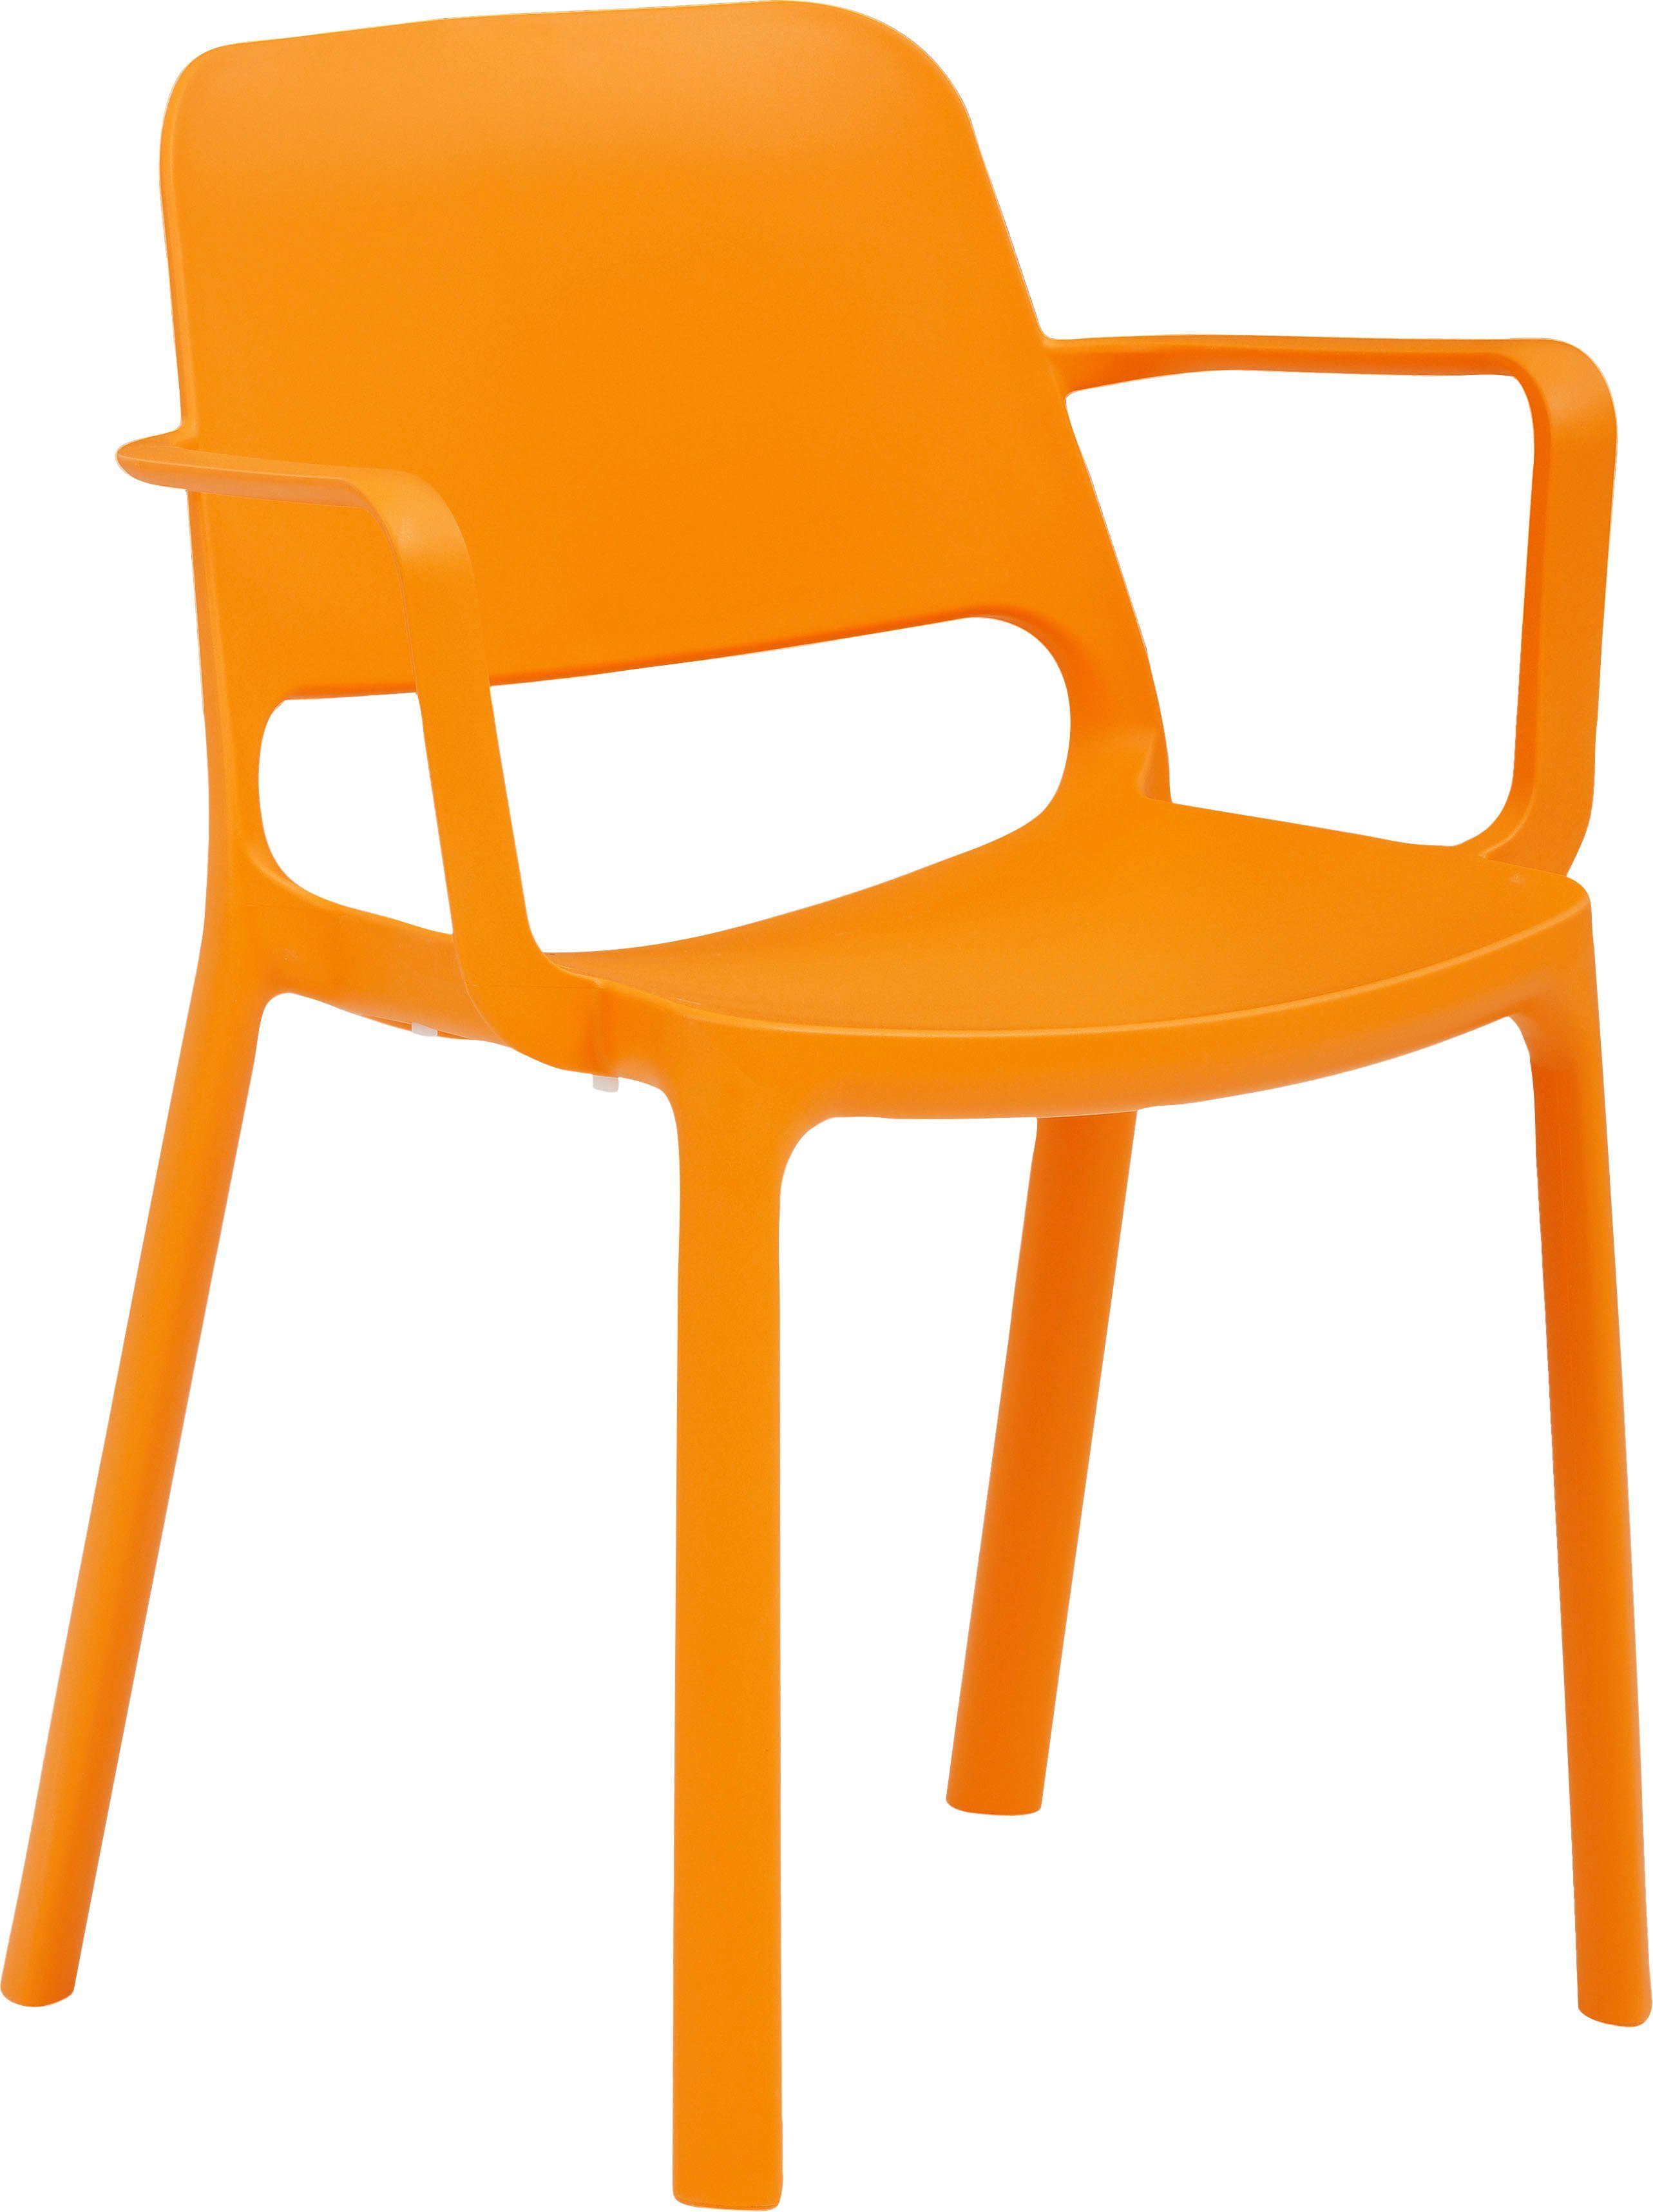 Mayer Sitzmöbel Stapelstuhl Stapelstuhl | | stapelbar Orange (Packung), Orange Orange myNUKE